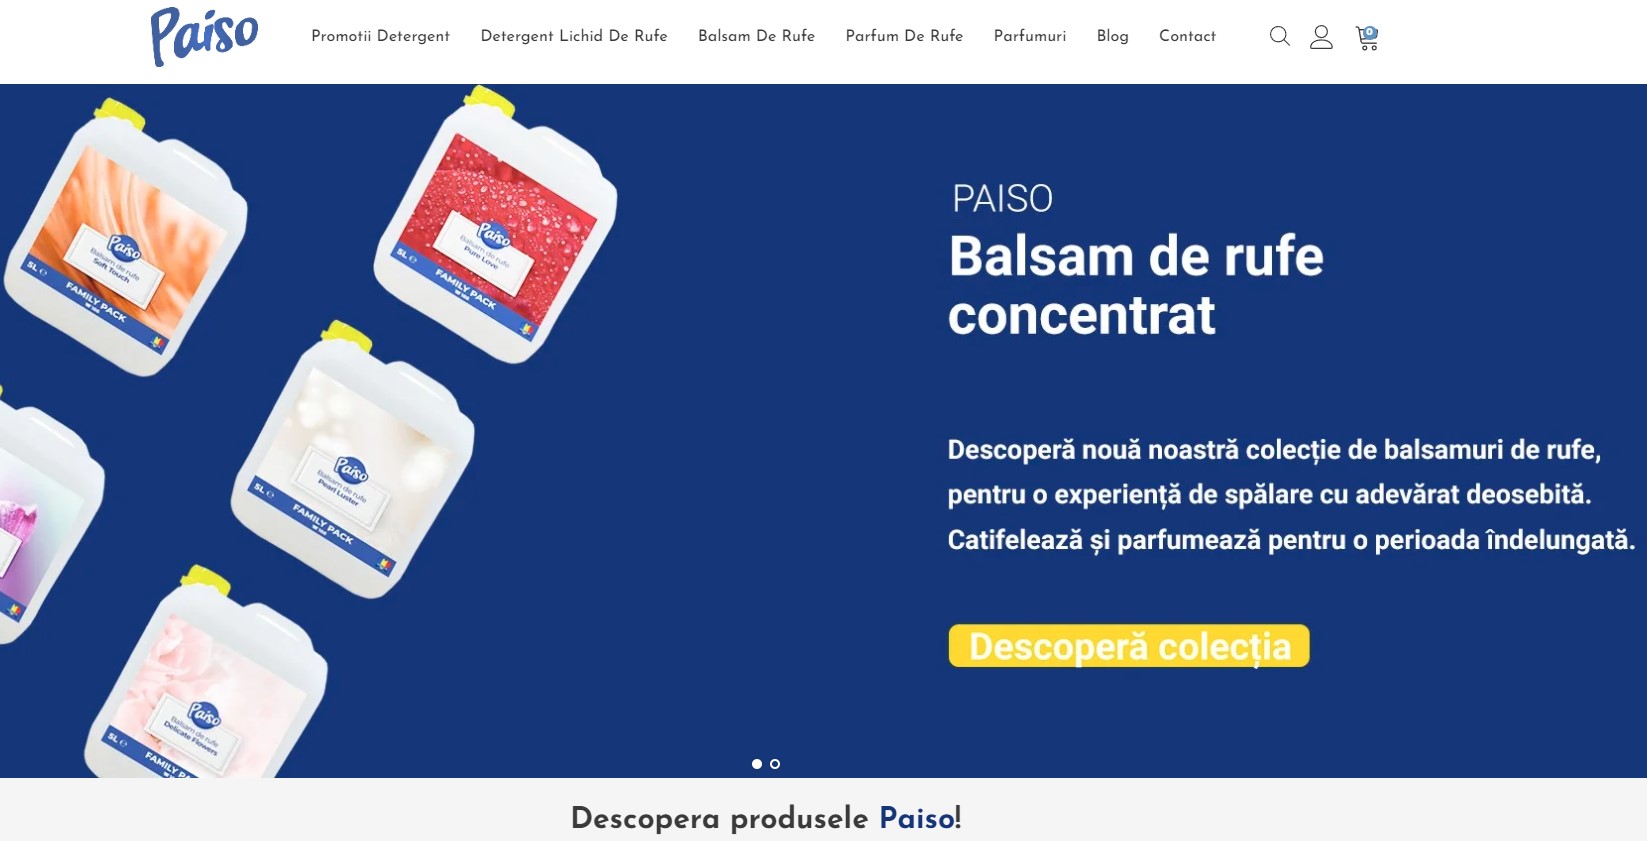 Detergent Lichid De Rufe Paiso